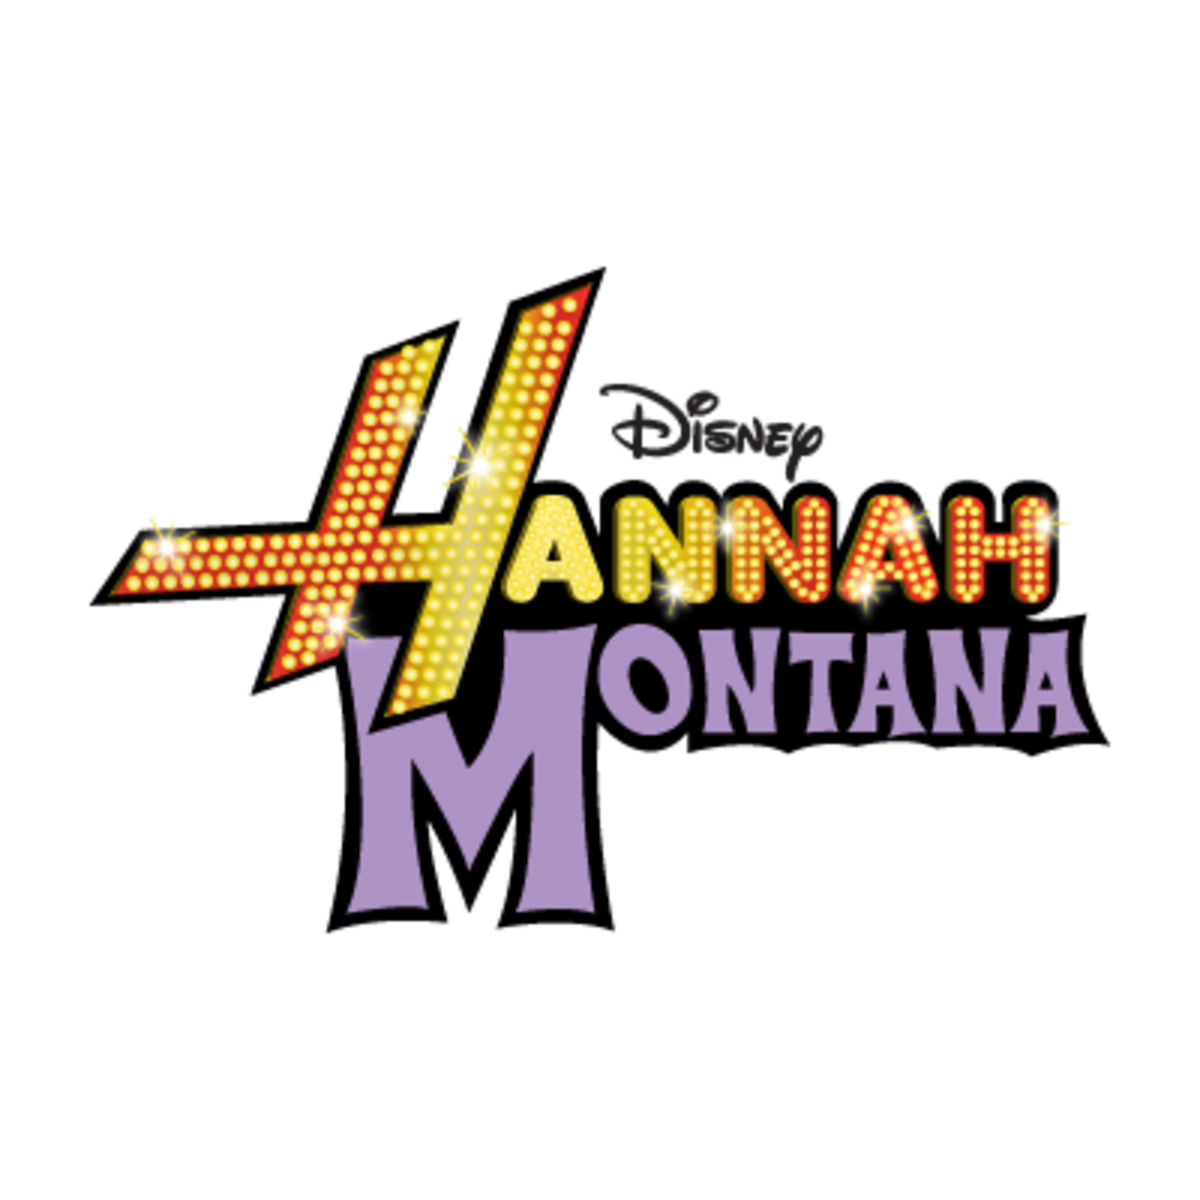 Hannah Montana - Miley Cyrus by Weehe on DeviantArt